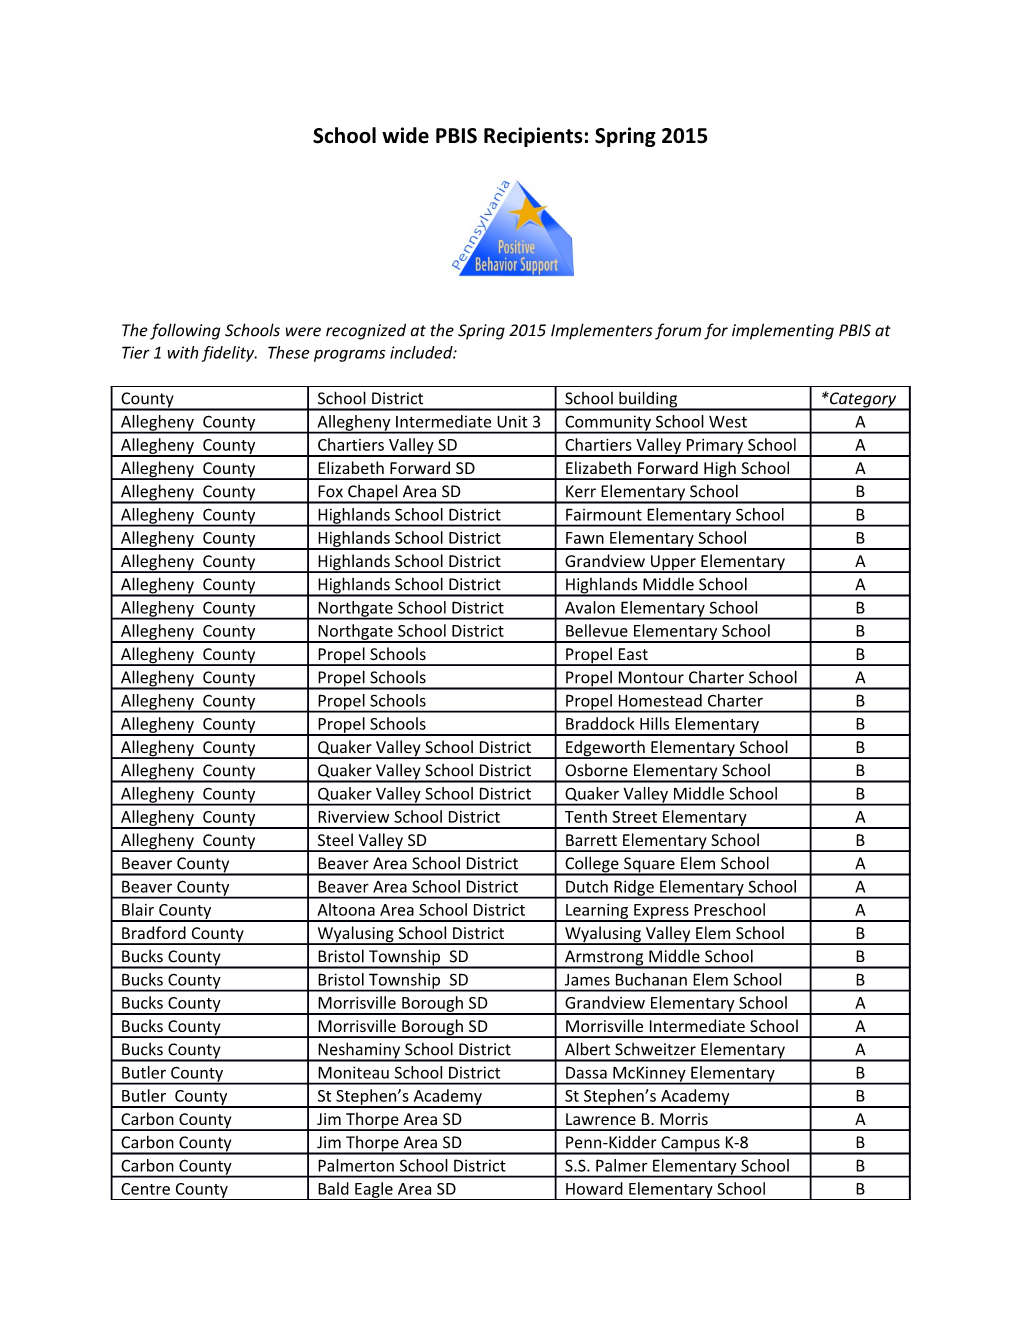 School Wide PBIS Recipients: Spring 2015